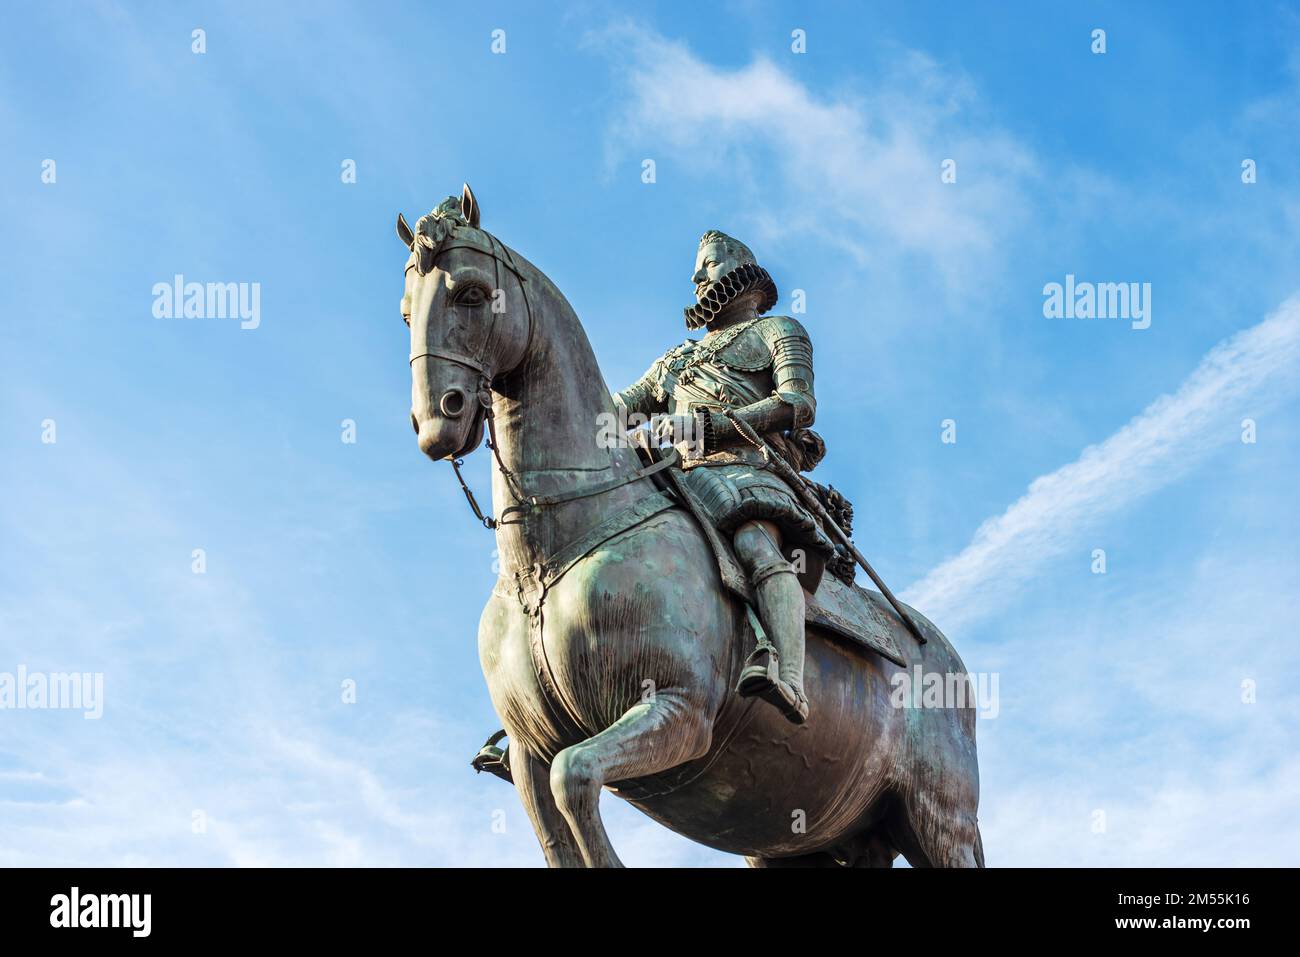 Bronze statue of King Philip III on Horseback (Felipe III or Felipe el Piadoso), in Plaza Mayor (main square), Madrid downtown, Spain, Europe. Stock Photo